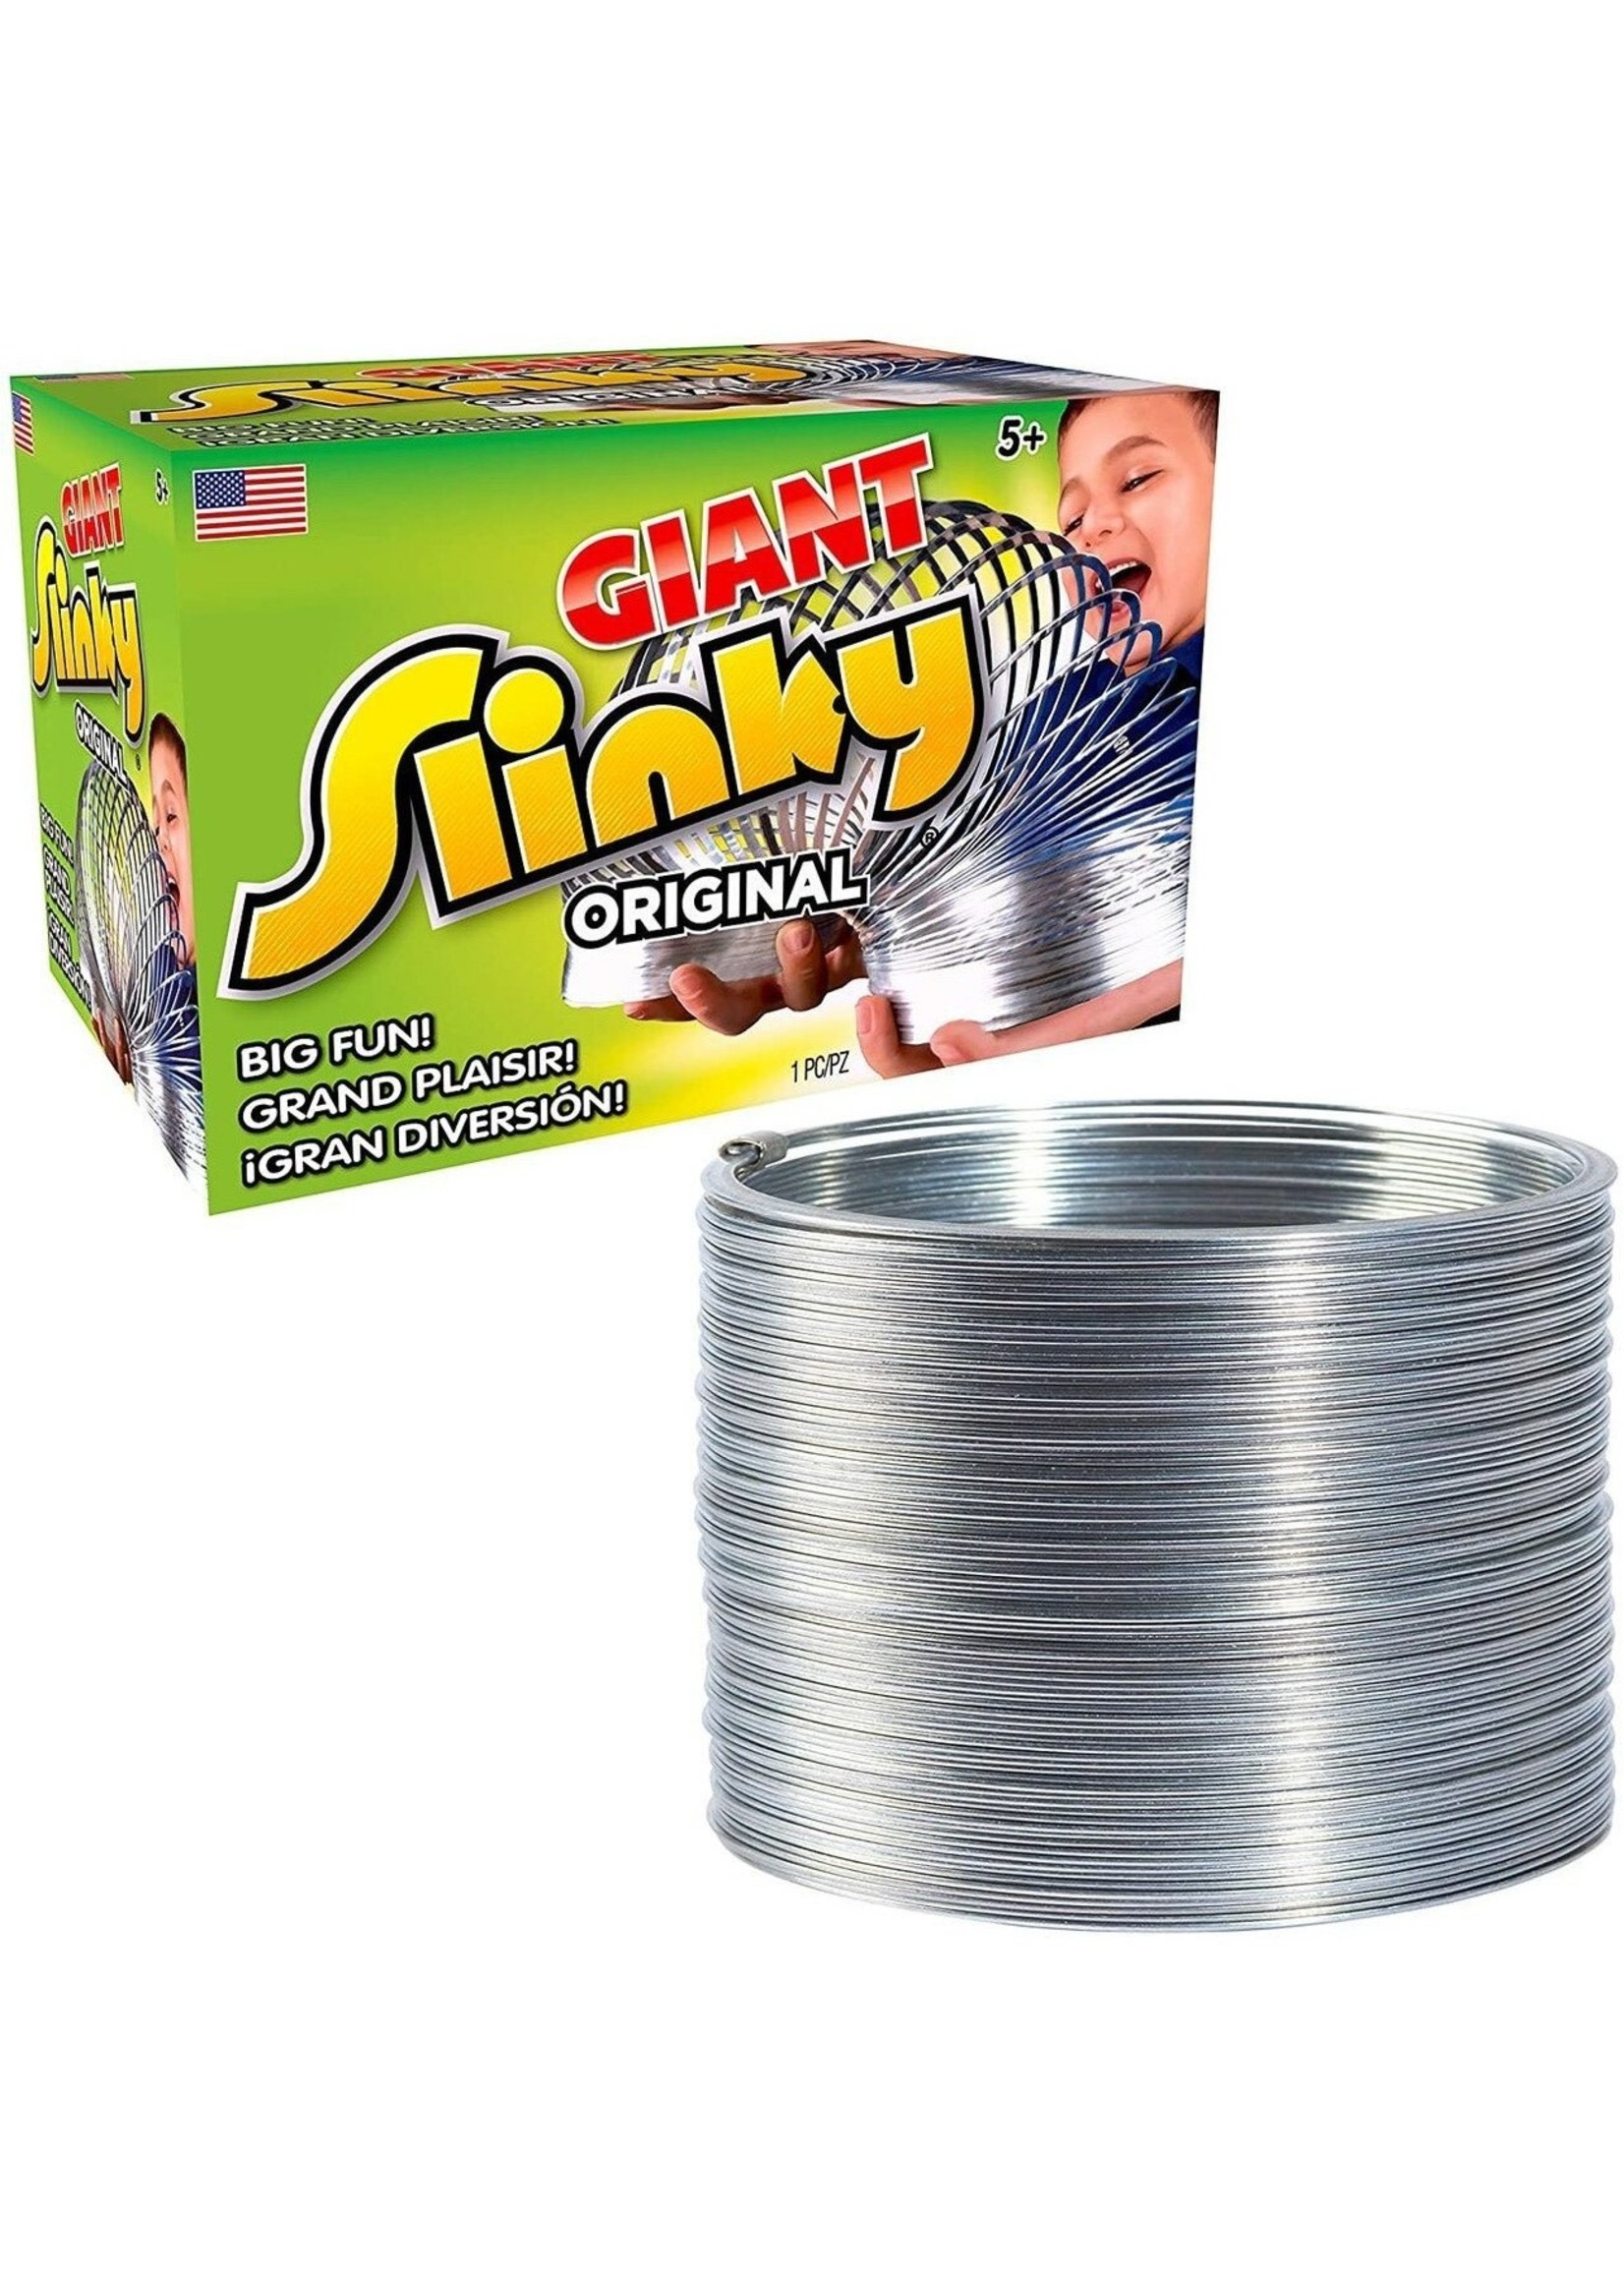 Just play Slinky géant ressort métal